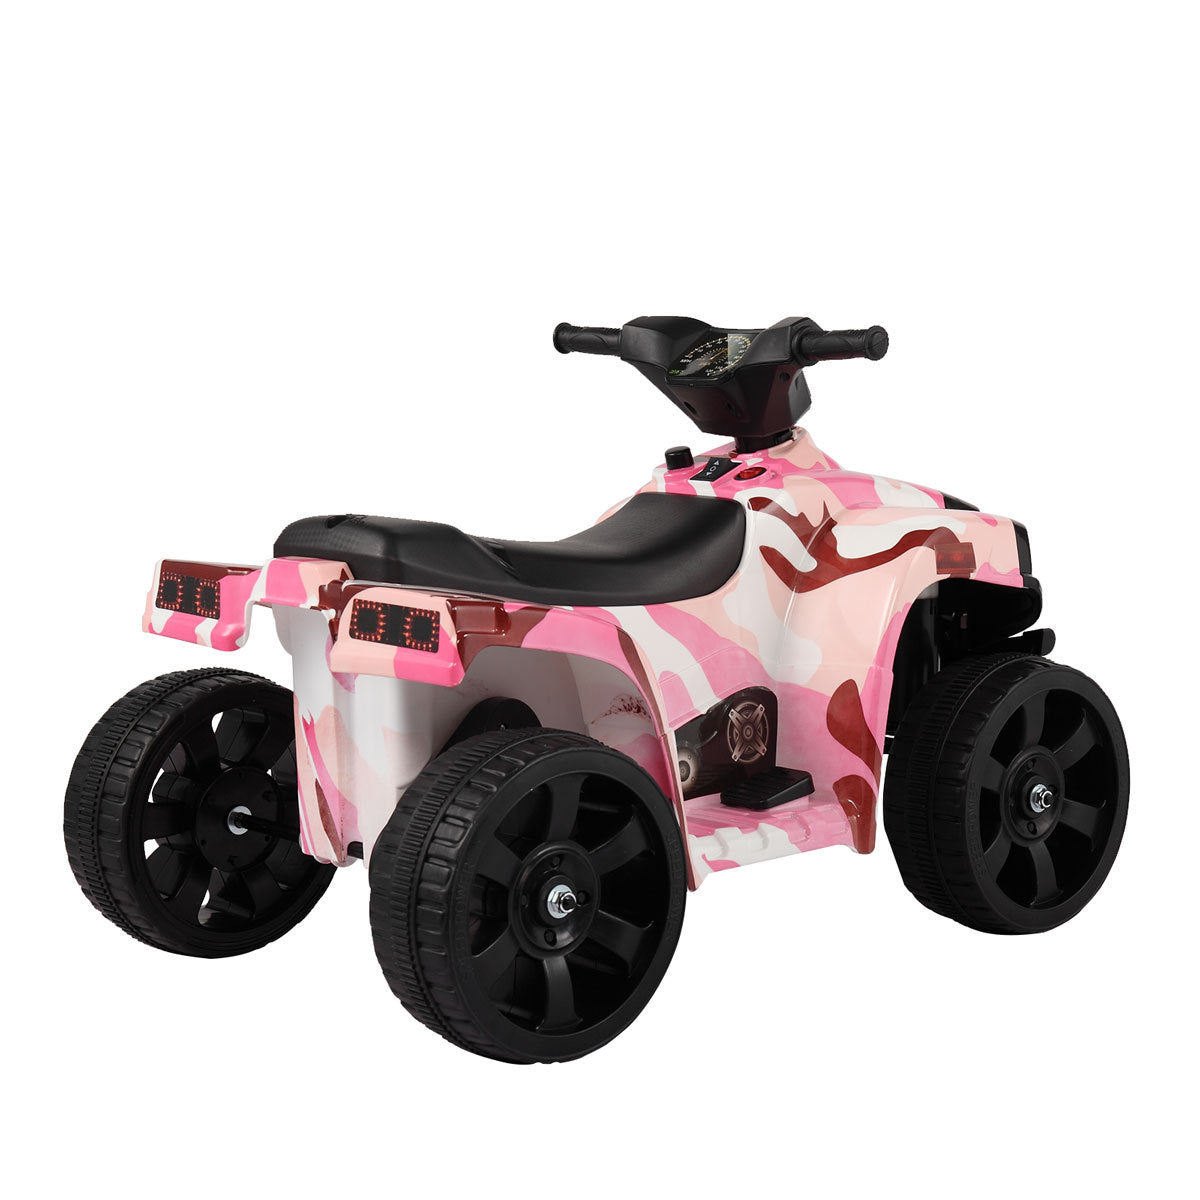 Kids Electric ATV Quad Ride On Car Toy - Pink&black - Tonkn